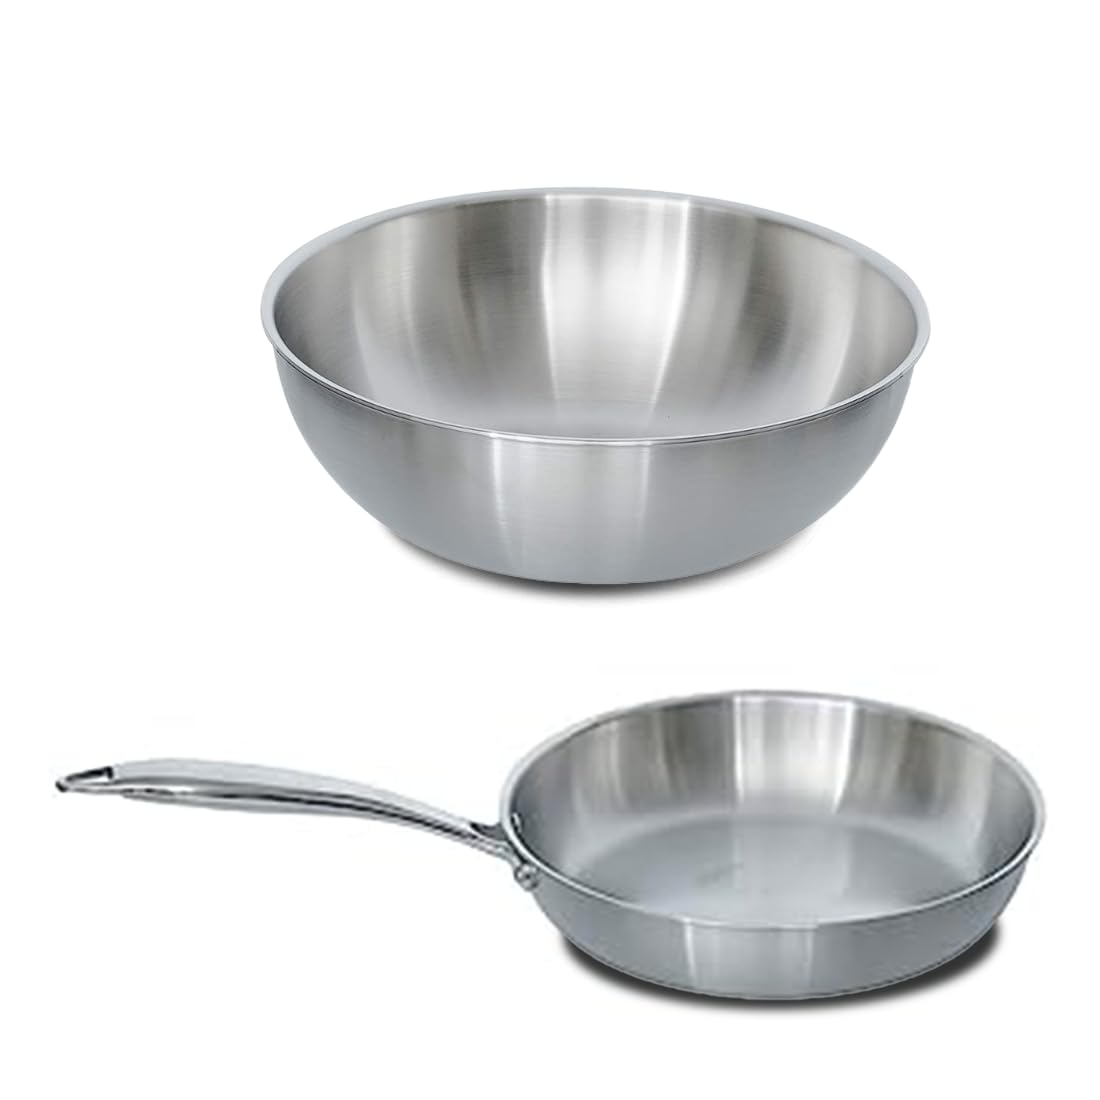 Femora Triply Bottom Stainless Steel 2 Pc Cookware Set, 24 cm Tasla, 24 cm Frypan